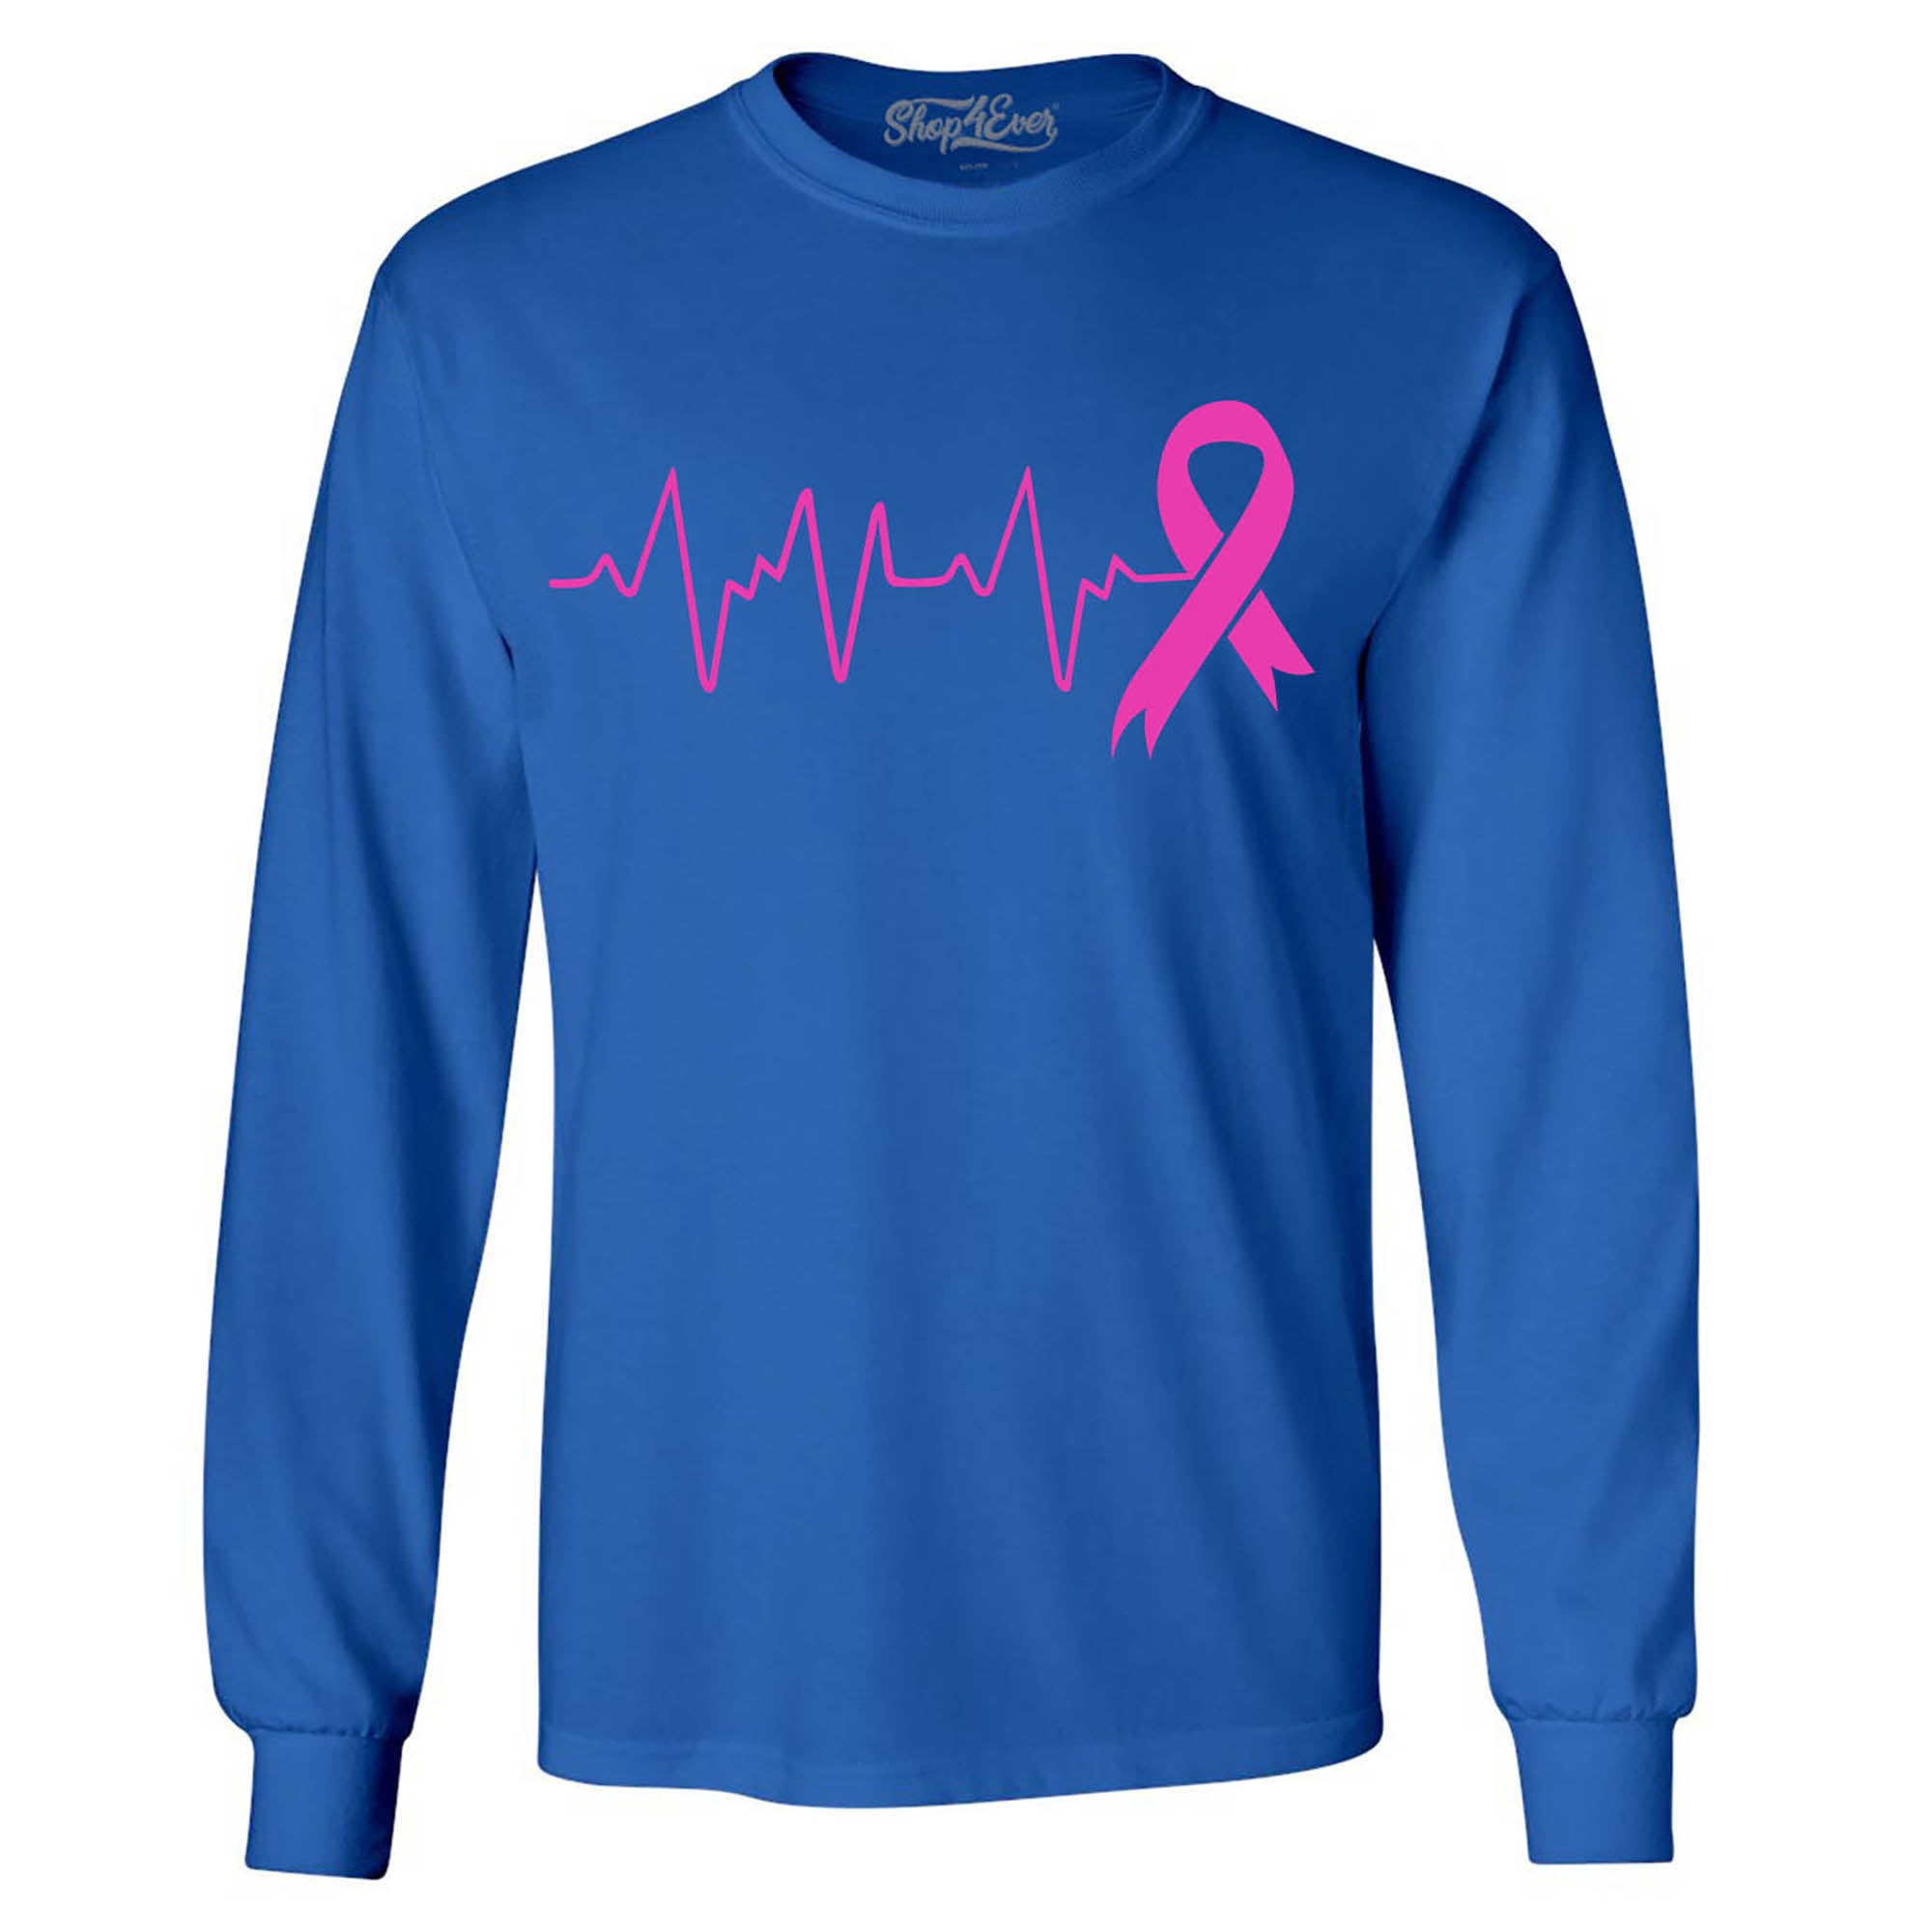 Heartbeat Pink Ribbon Breast Cancer Awareness Long Sleeve Shirt